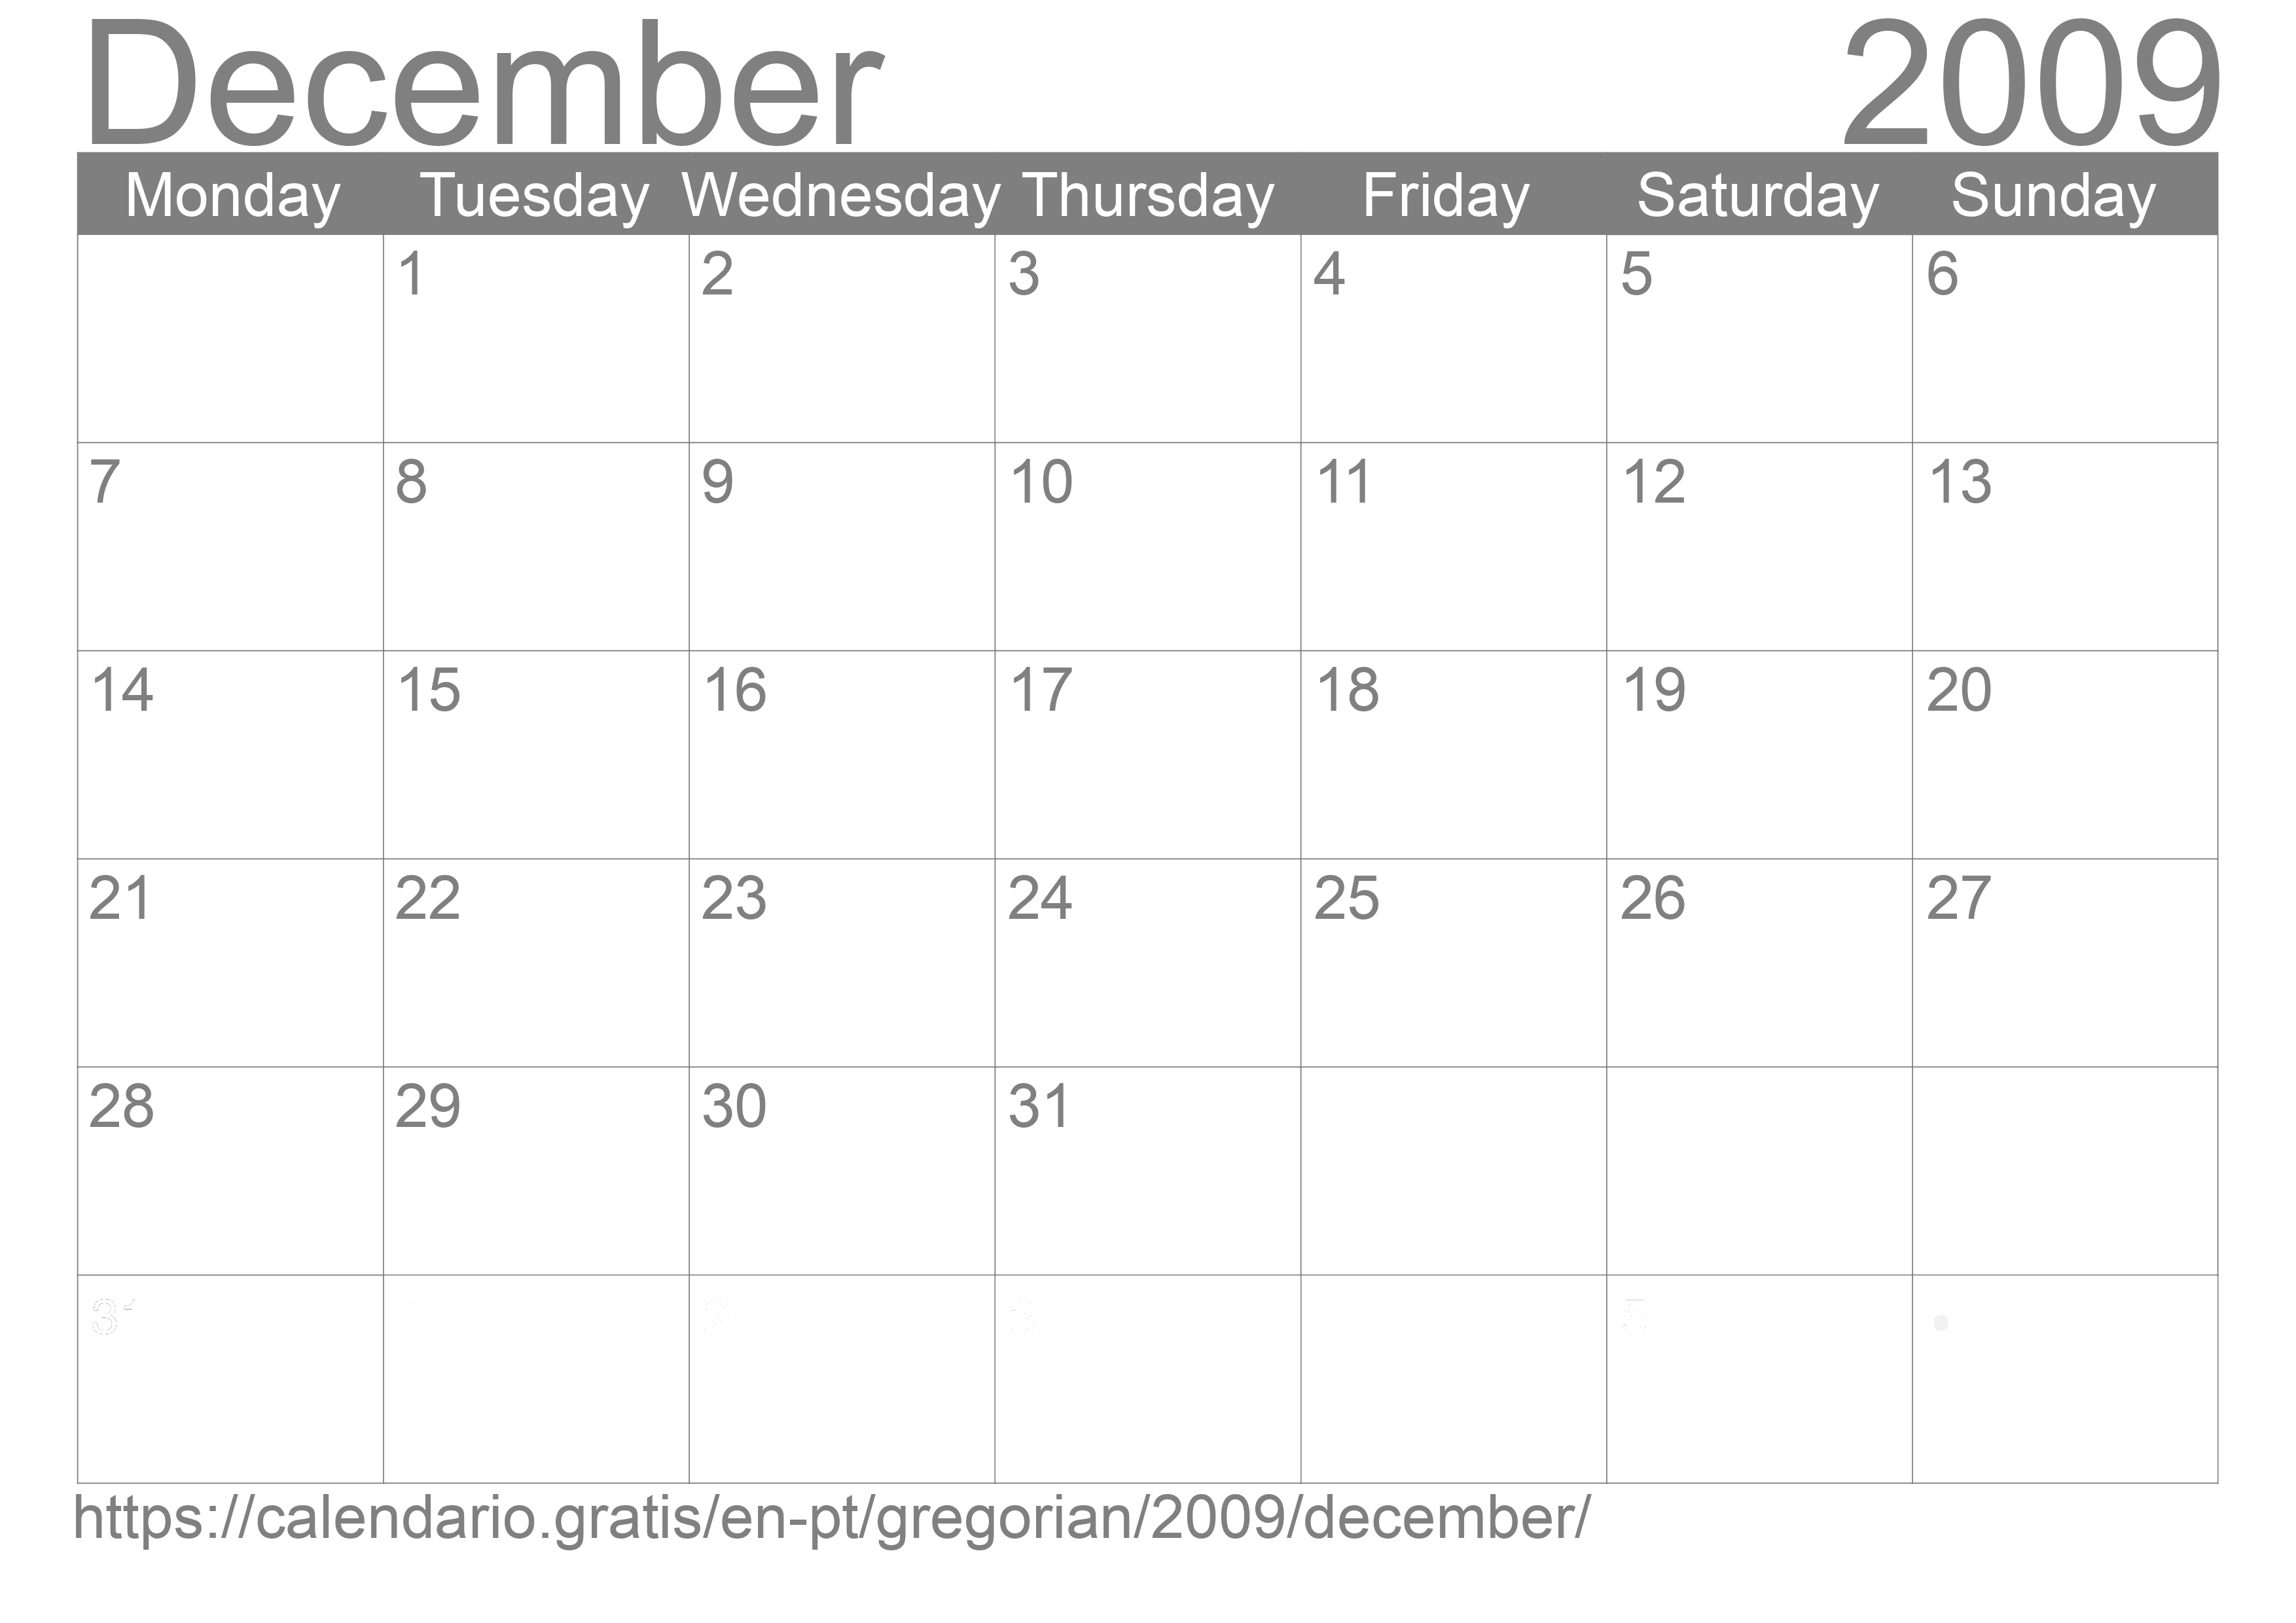 Calendar December 2009 to print